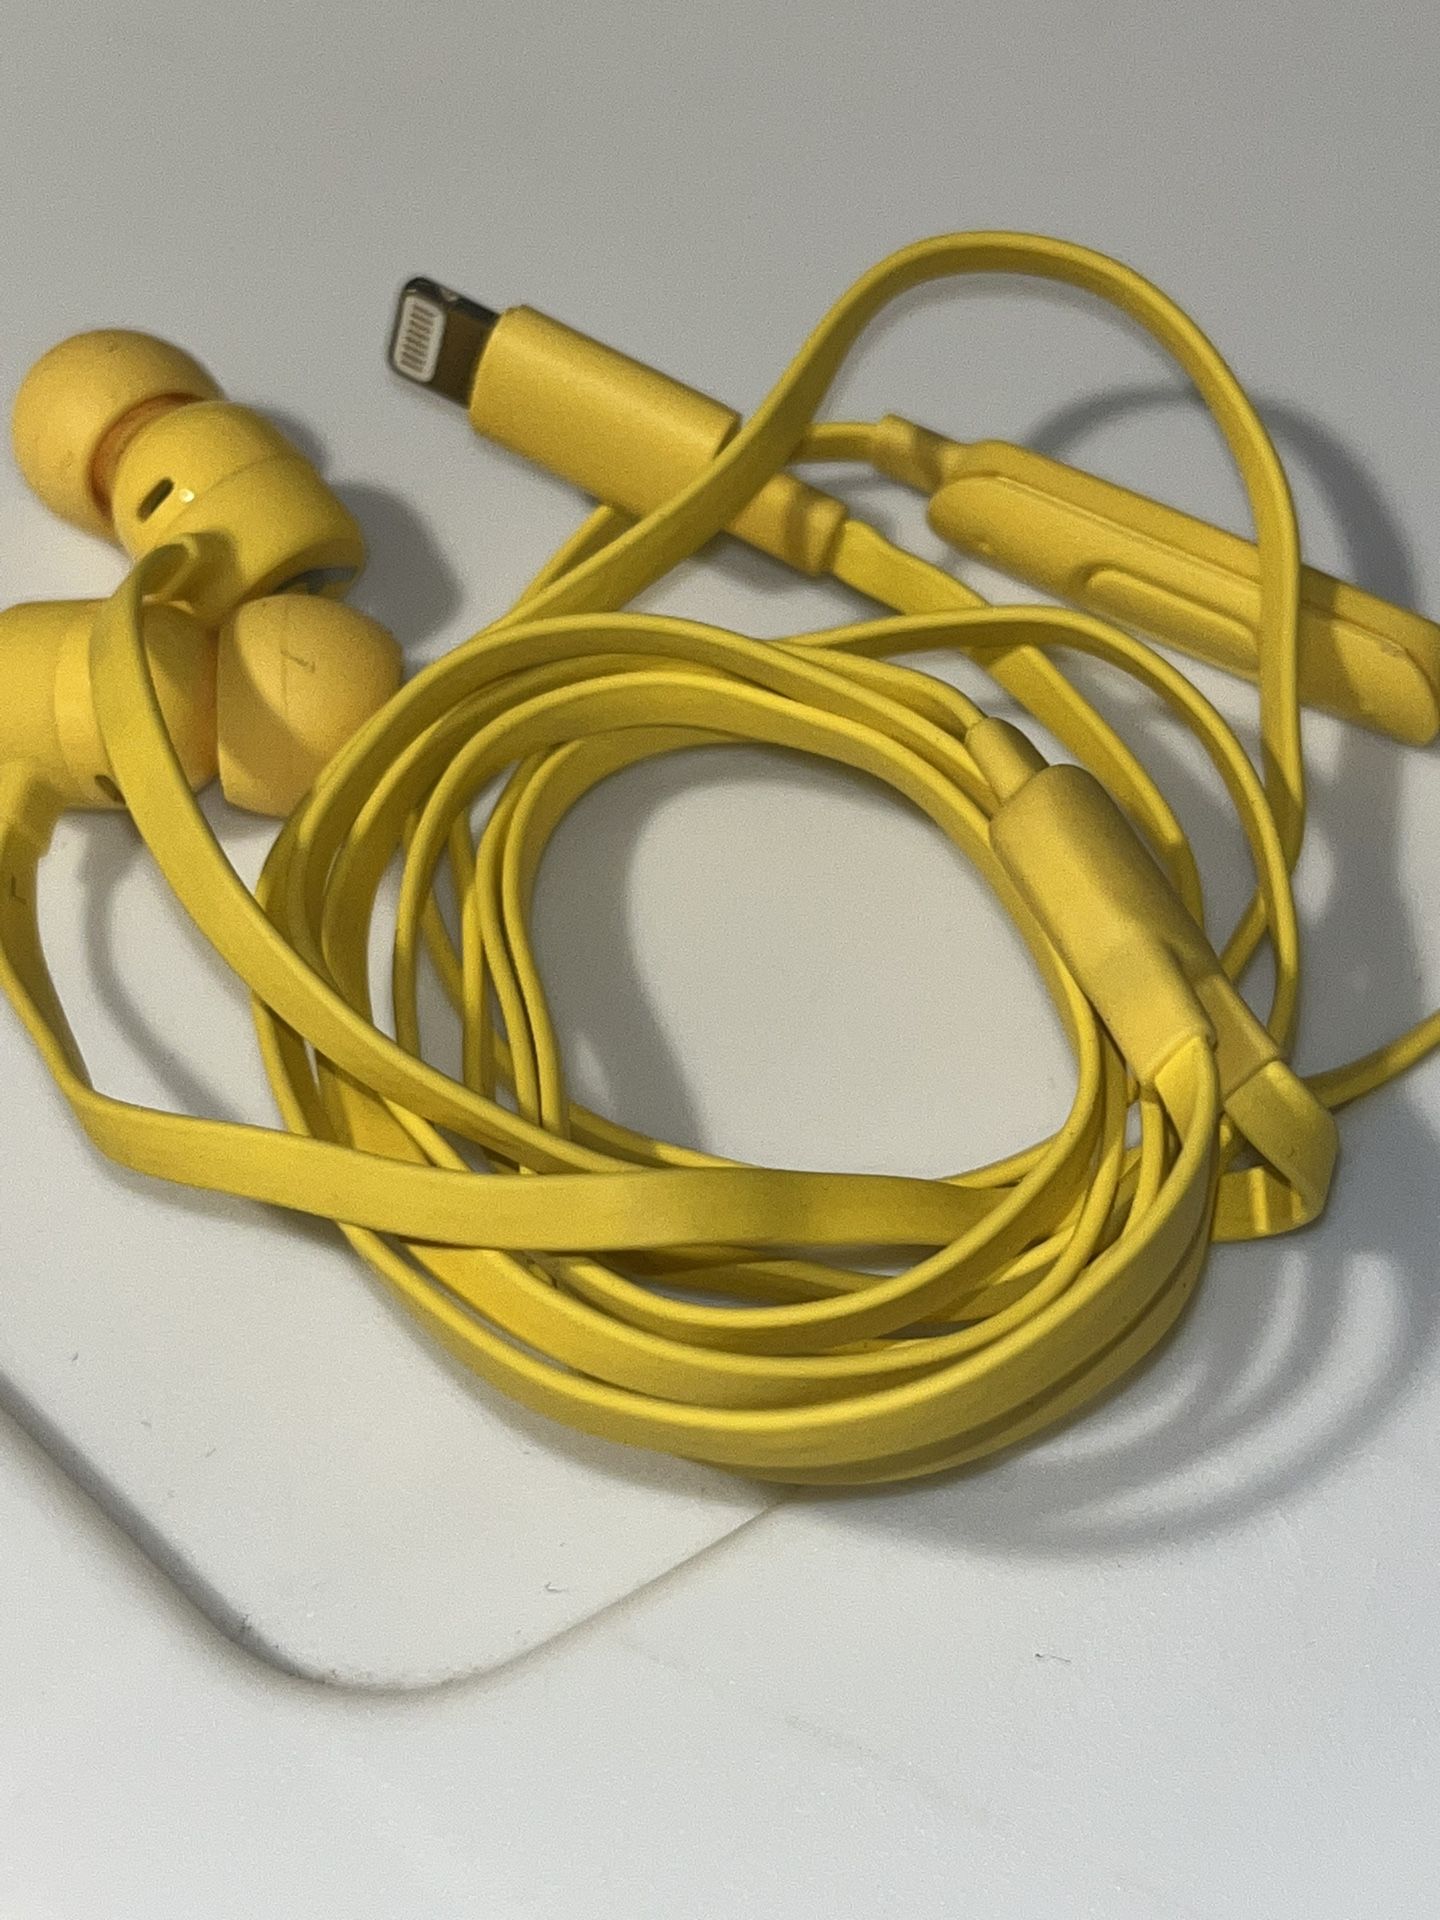 Beats - urBeats³ Earphones with Lightning Connector - Yellow